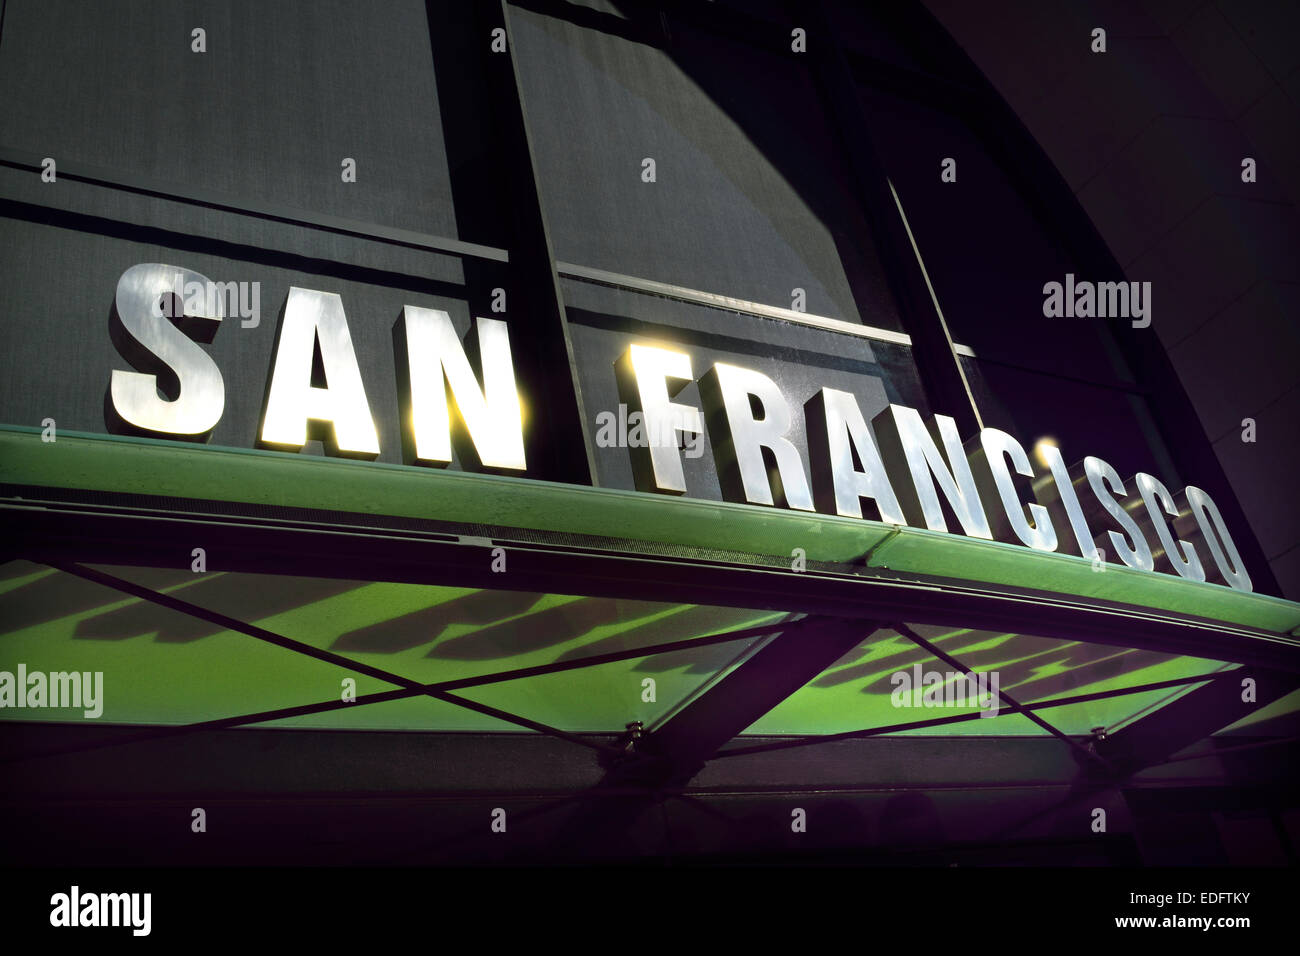 Sunlit San Francisco sign above entrance to embarkation boat piers on Embarcadero San Francisco California USA Stock Photo